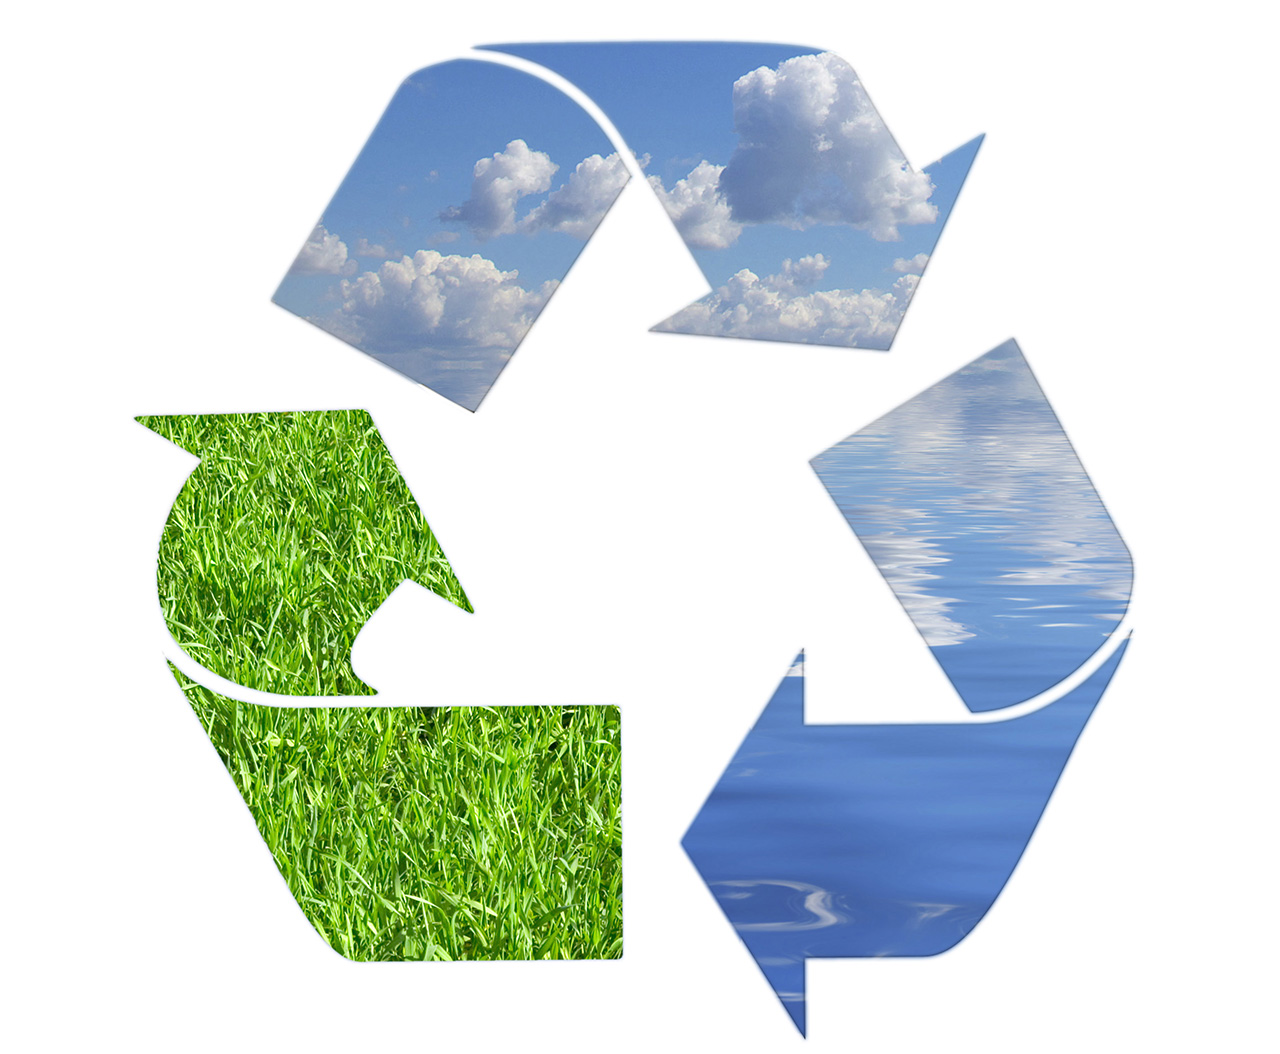 a recycling symbol